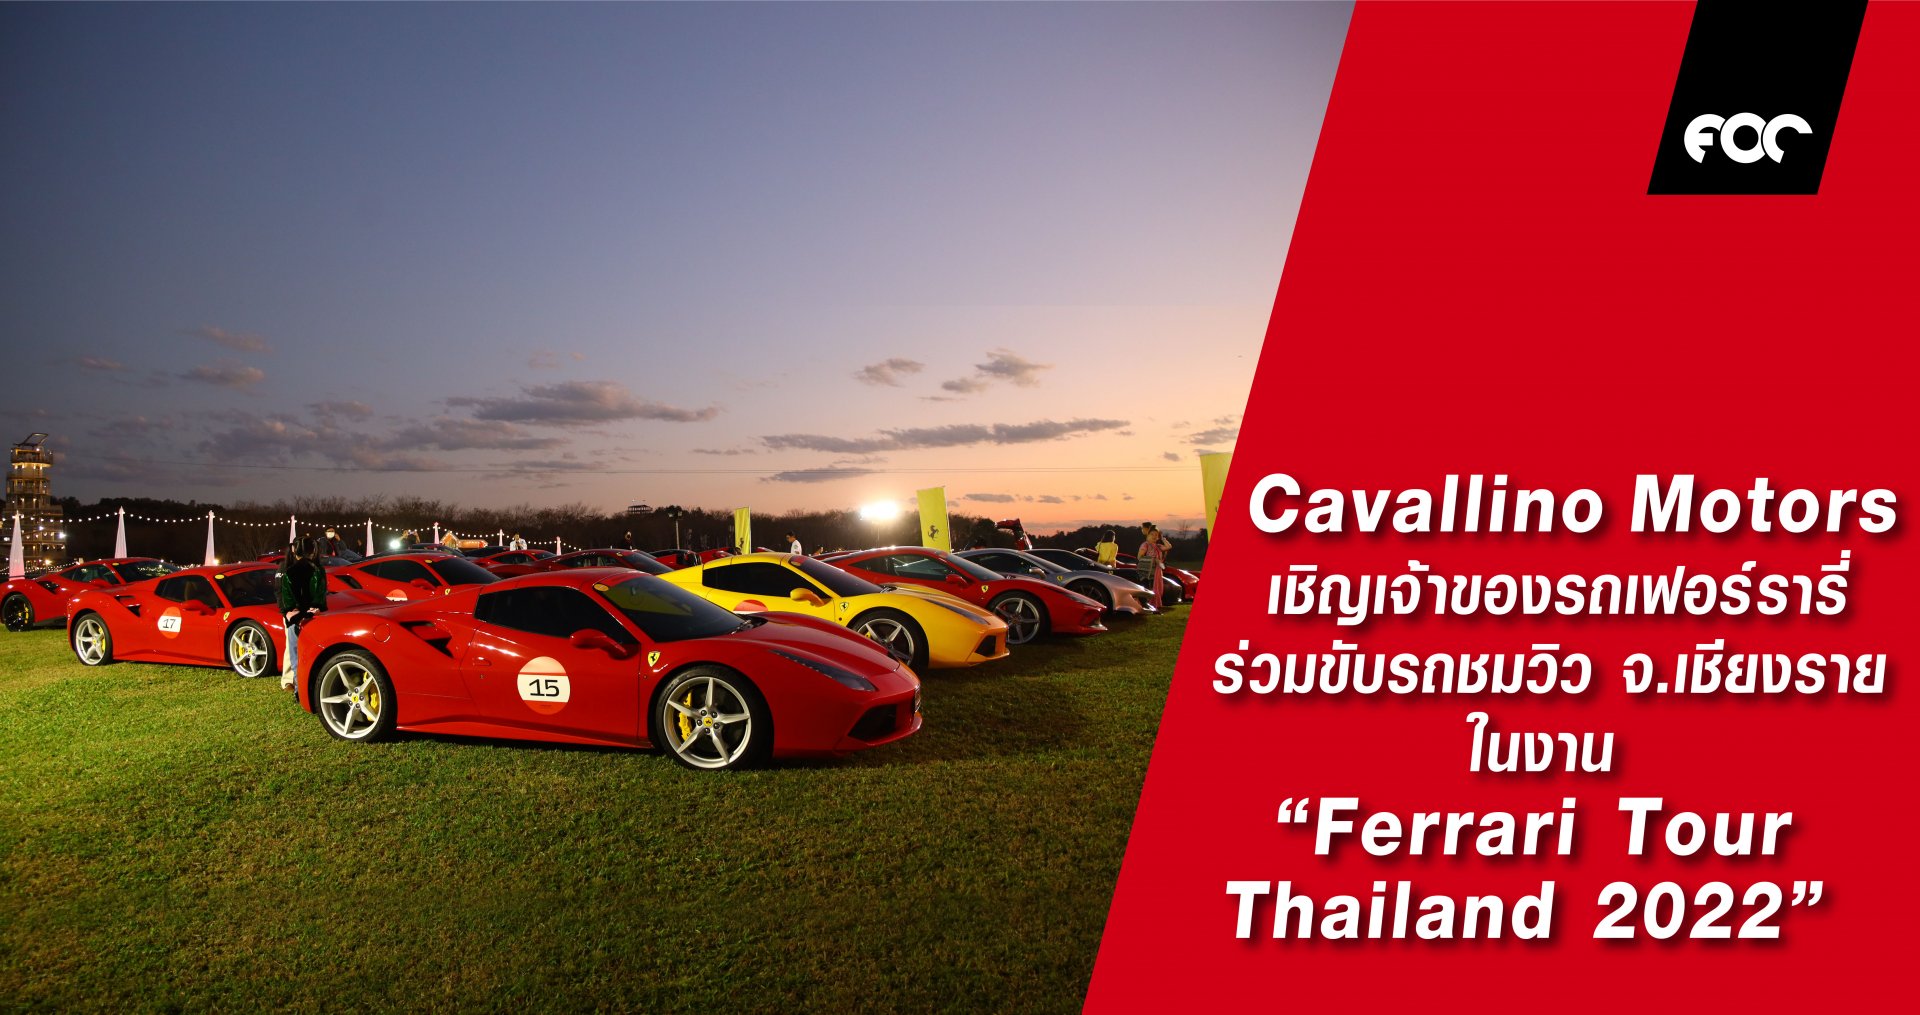 “Ferrari Tour Thailand 2022”